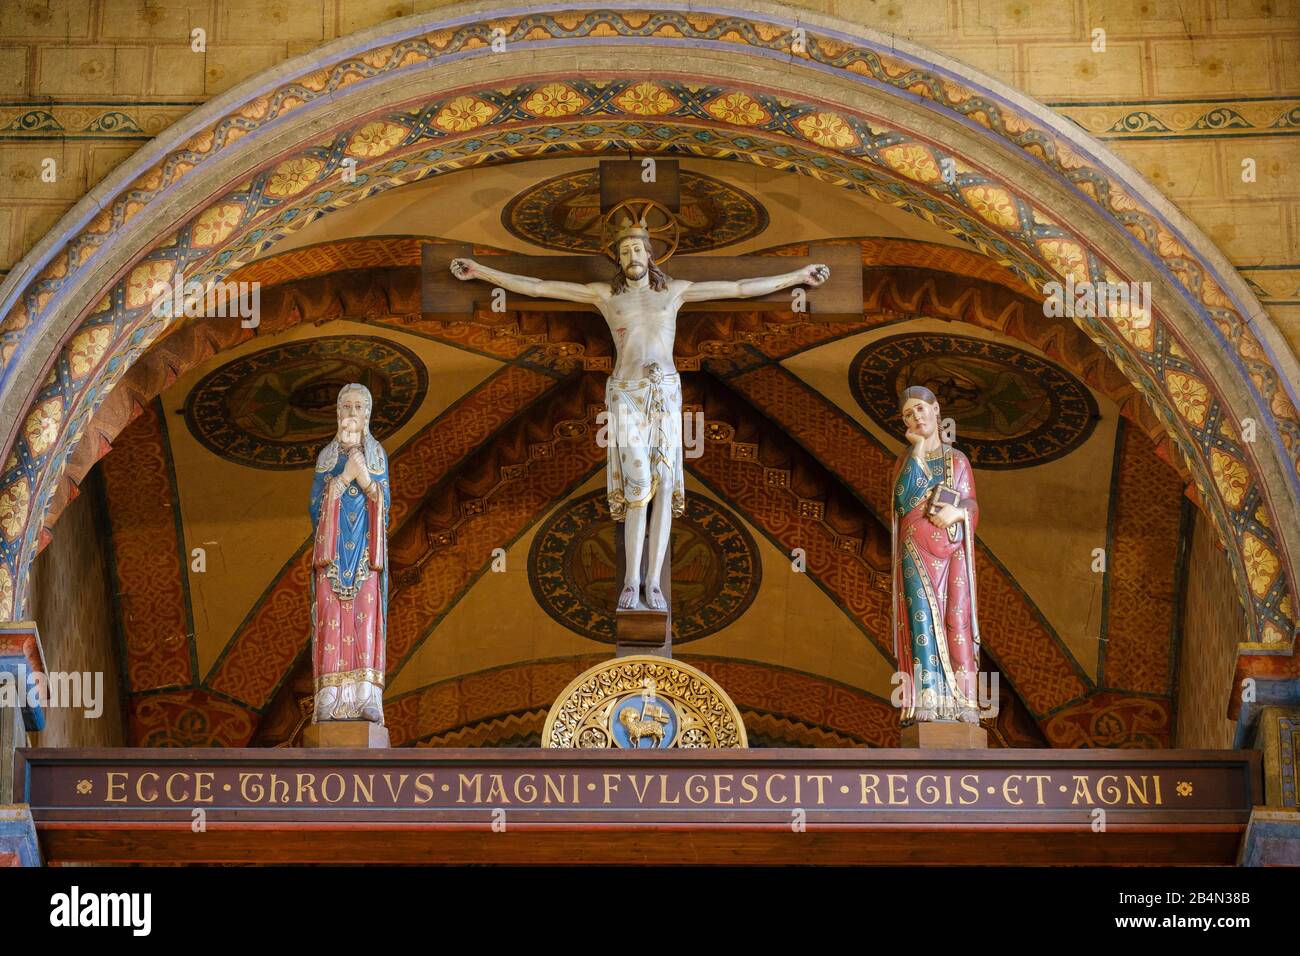 Crucifix over chancel, Schottenkirche St. jakob, Regensburg, Upper Palatinate, Bavaria, Germany Stock Photo